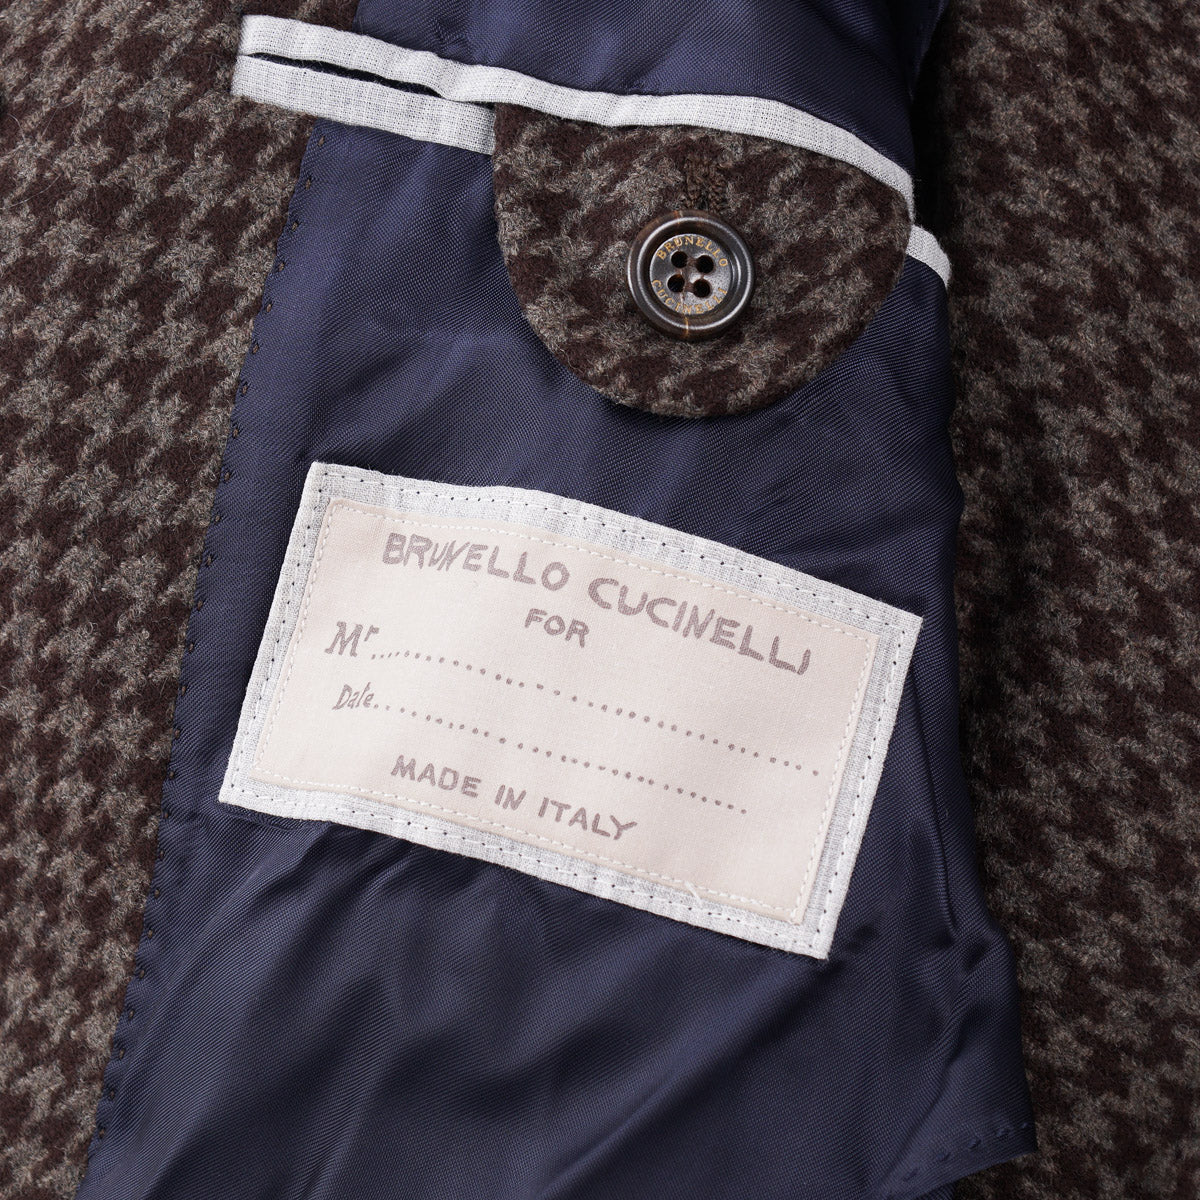 Brunello Cucinelli Houndstooth Wool Peacoat - Top Shelf Apparel